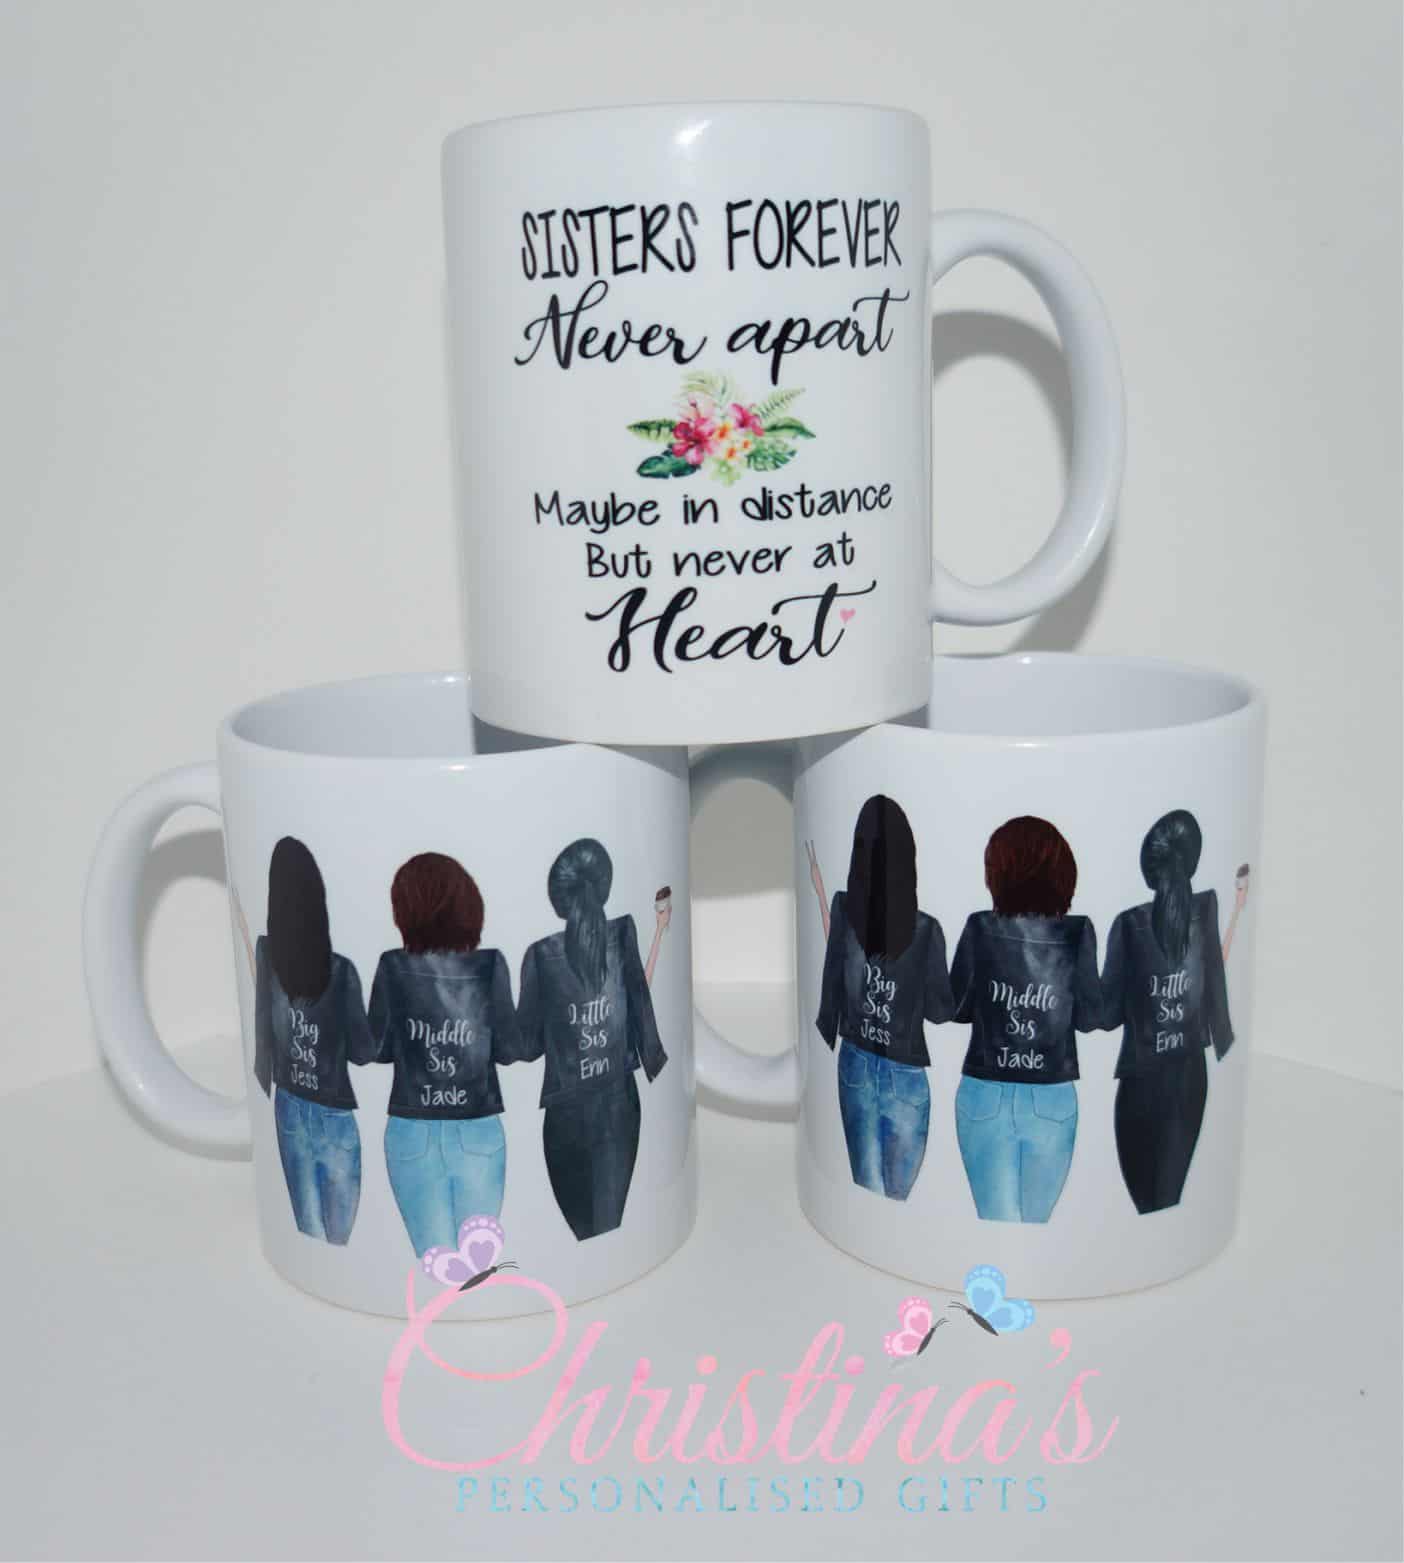 Mug Sisters - Christinas Personalised Gifts